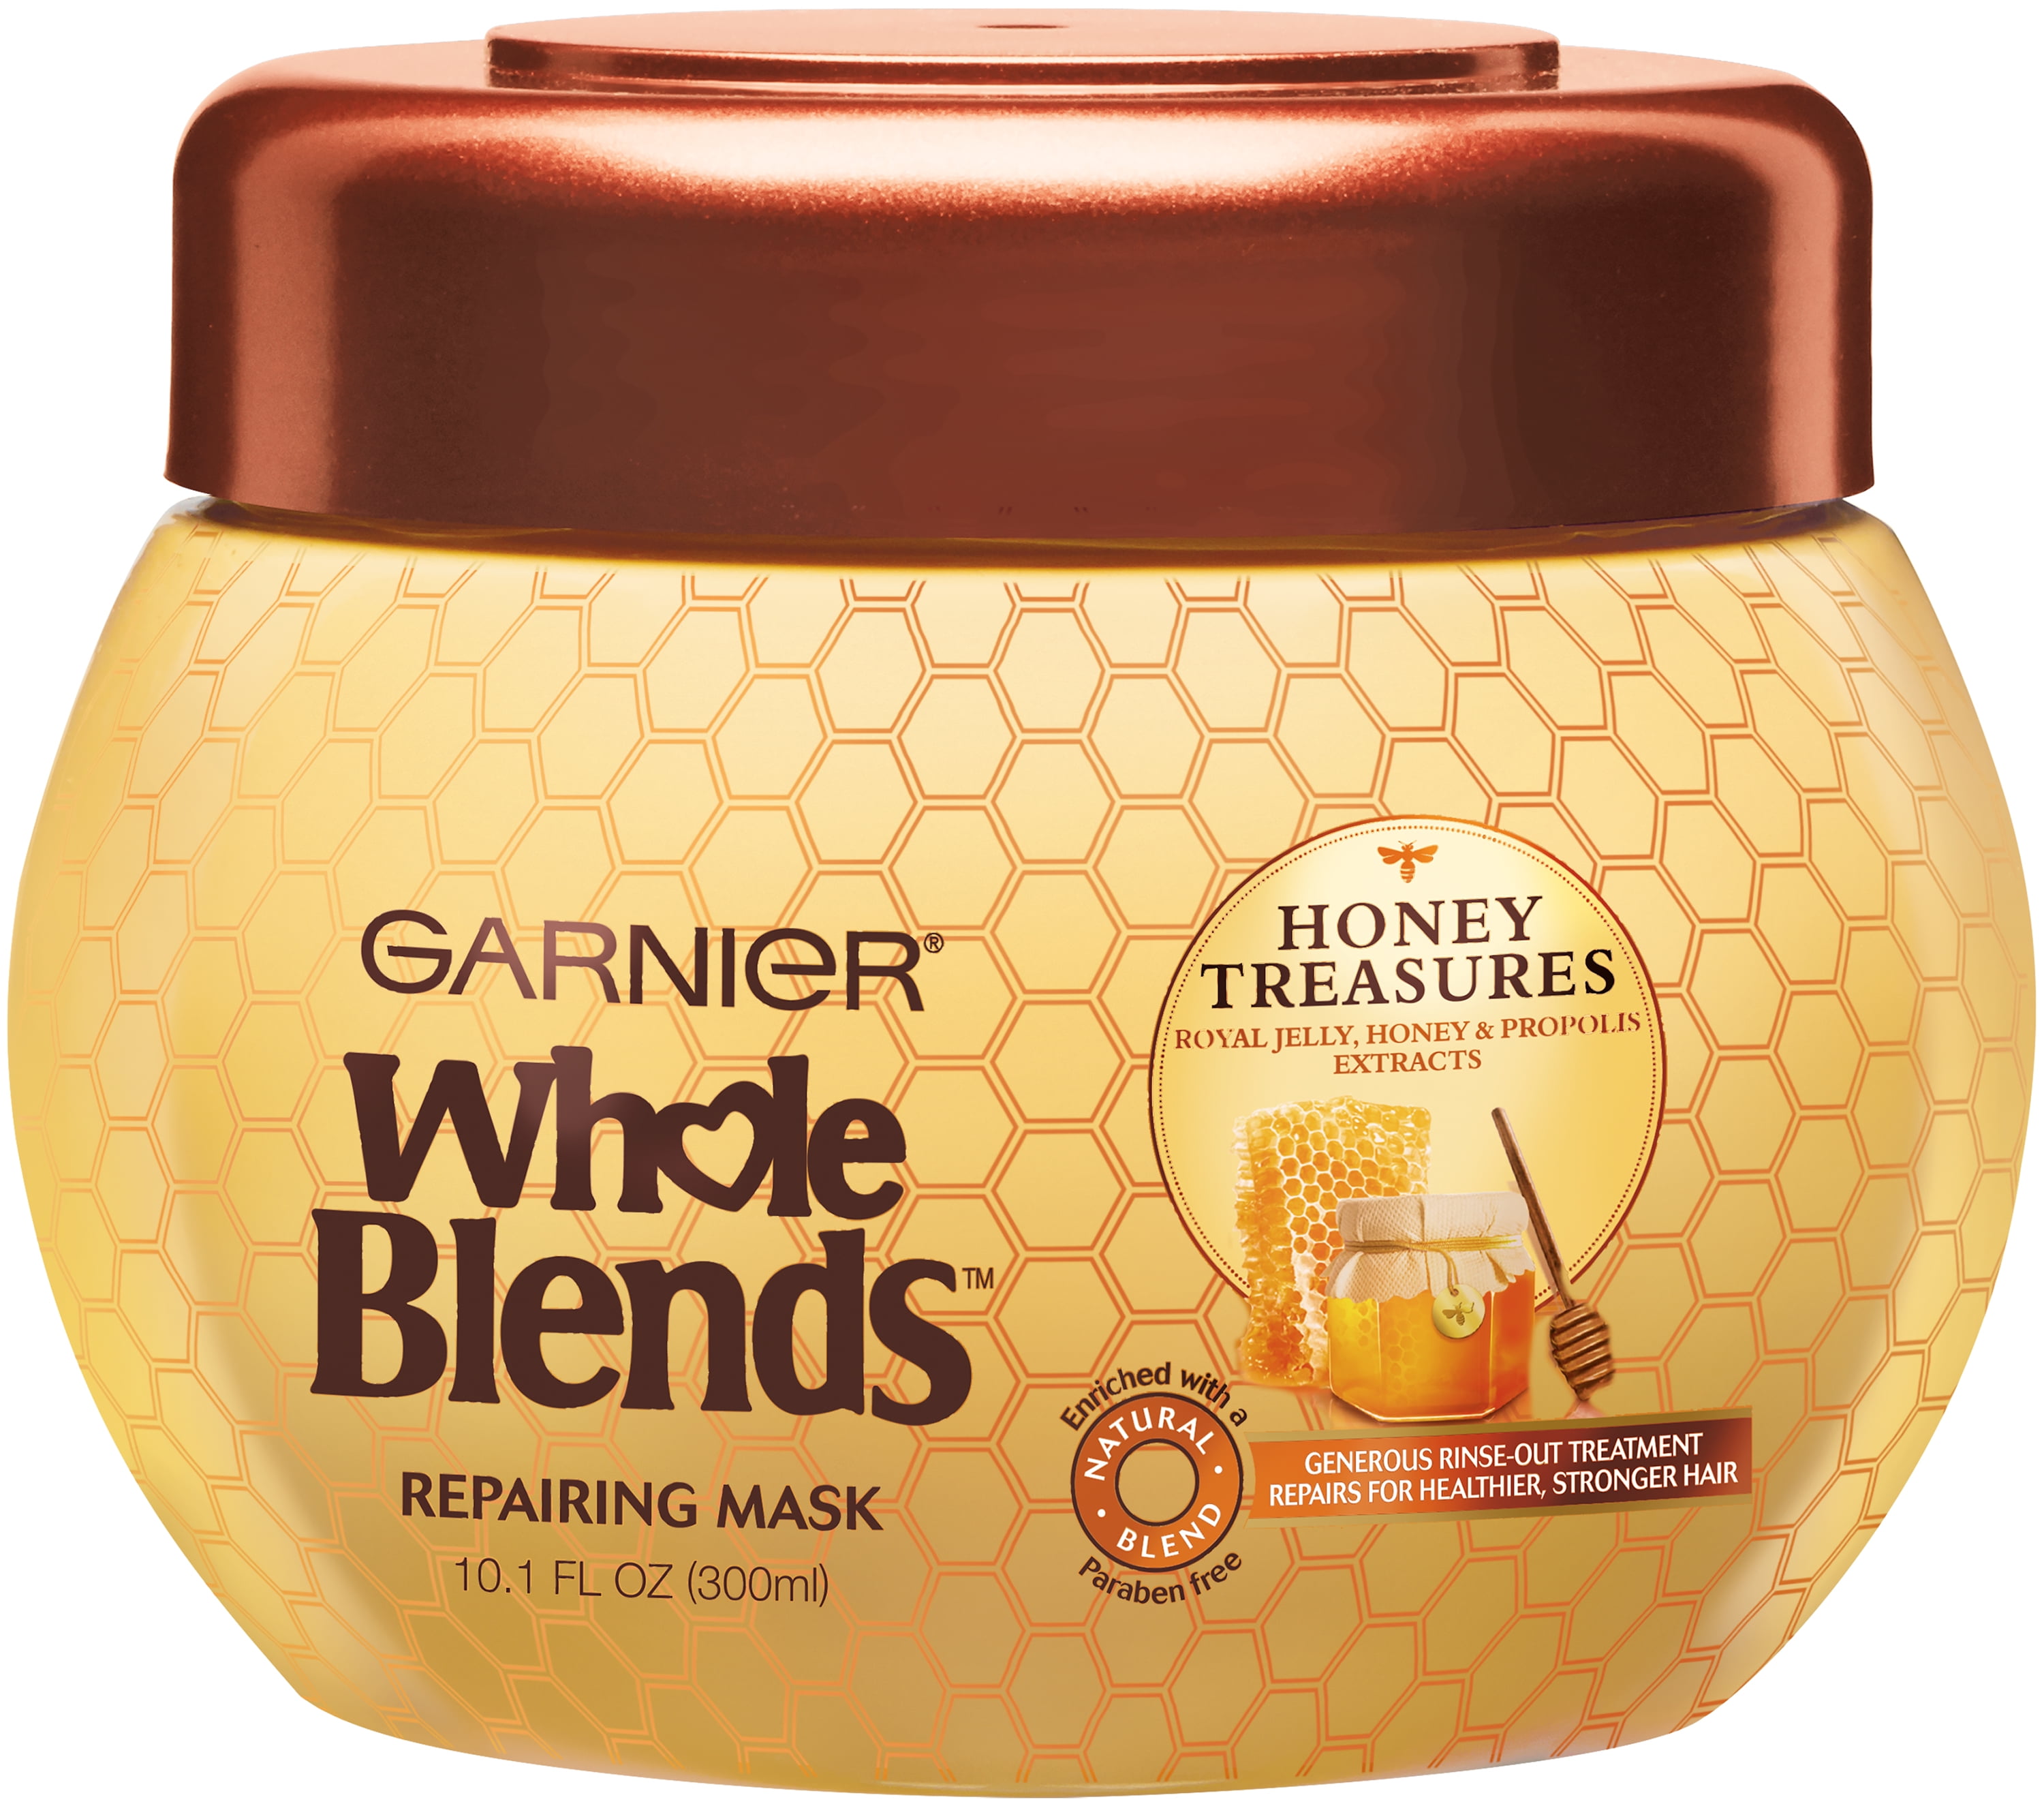 Garnier Whole Blends nourishing Repairing Hair Mask with Honey Treasures, 10.1 fl oz